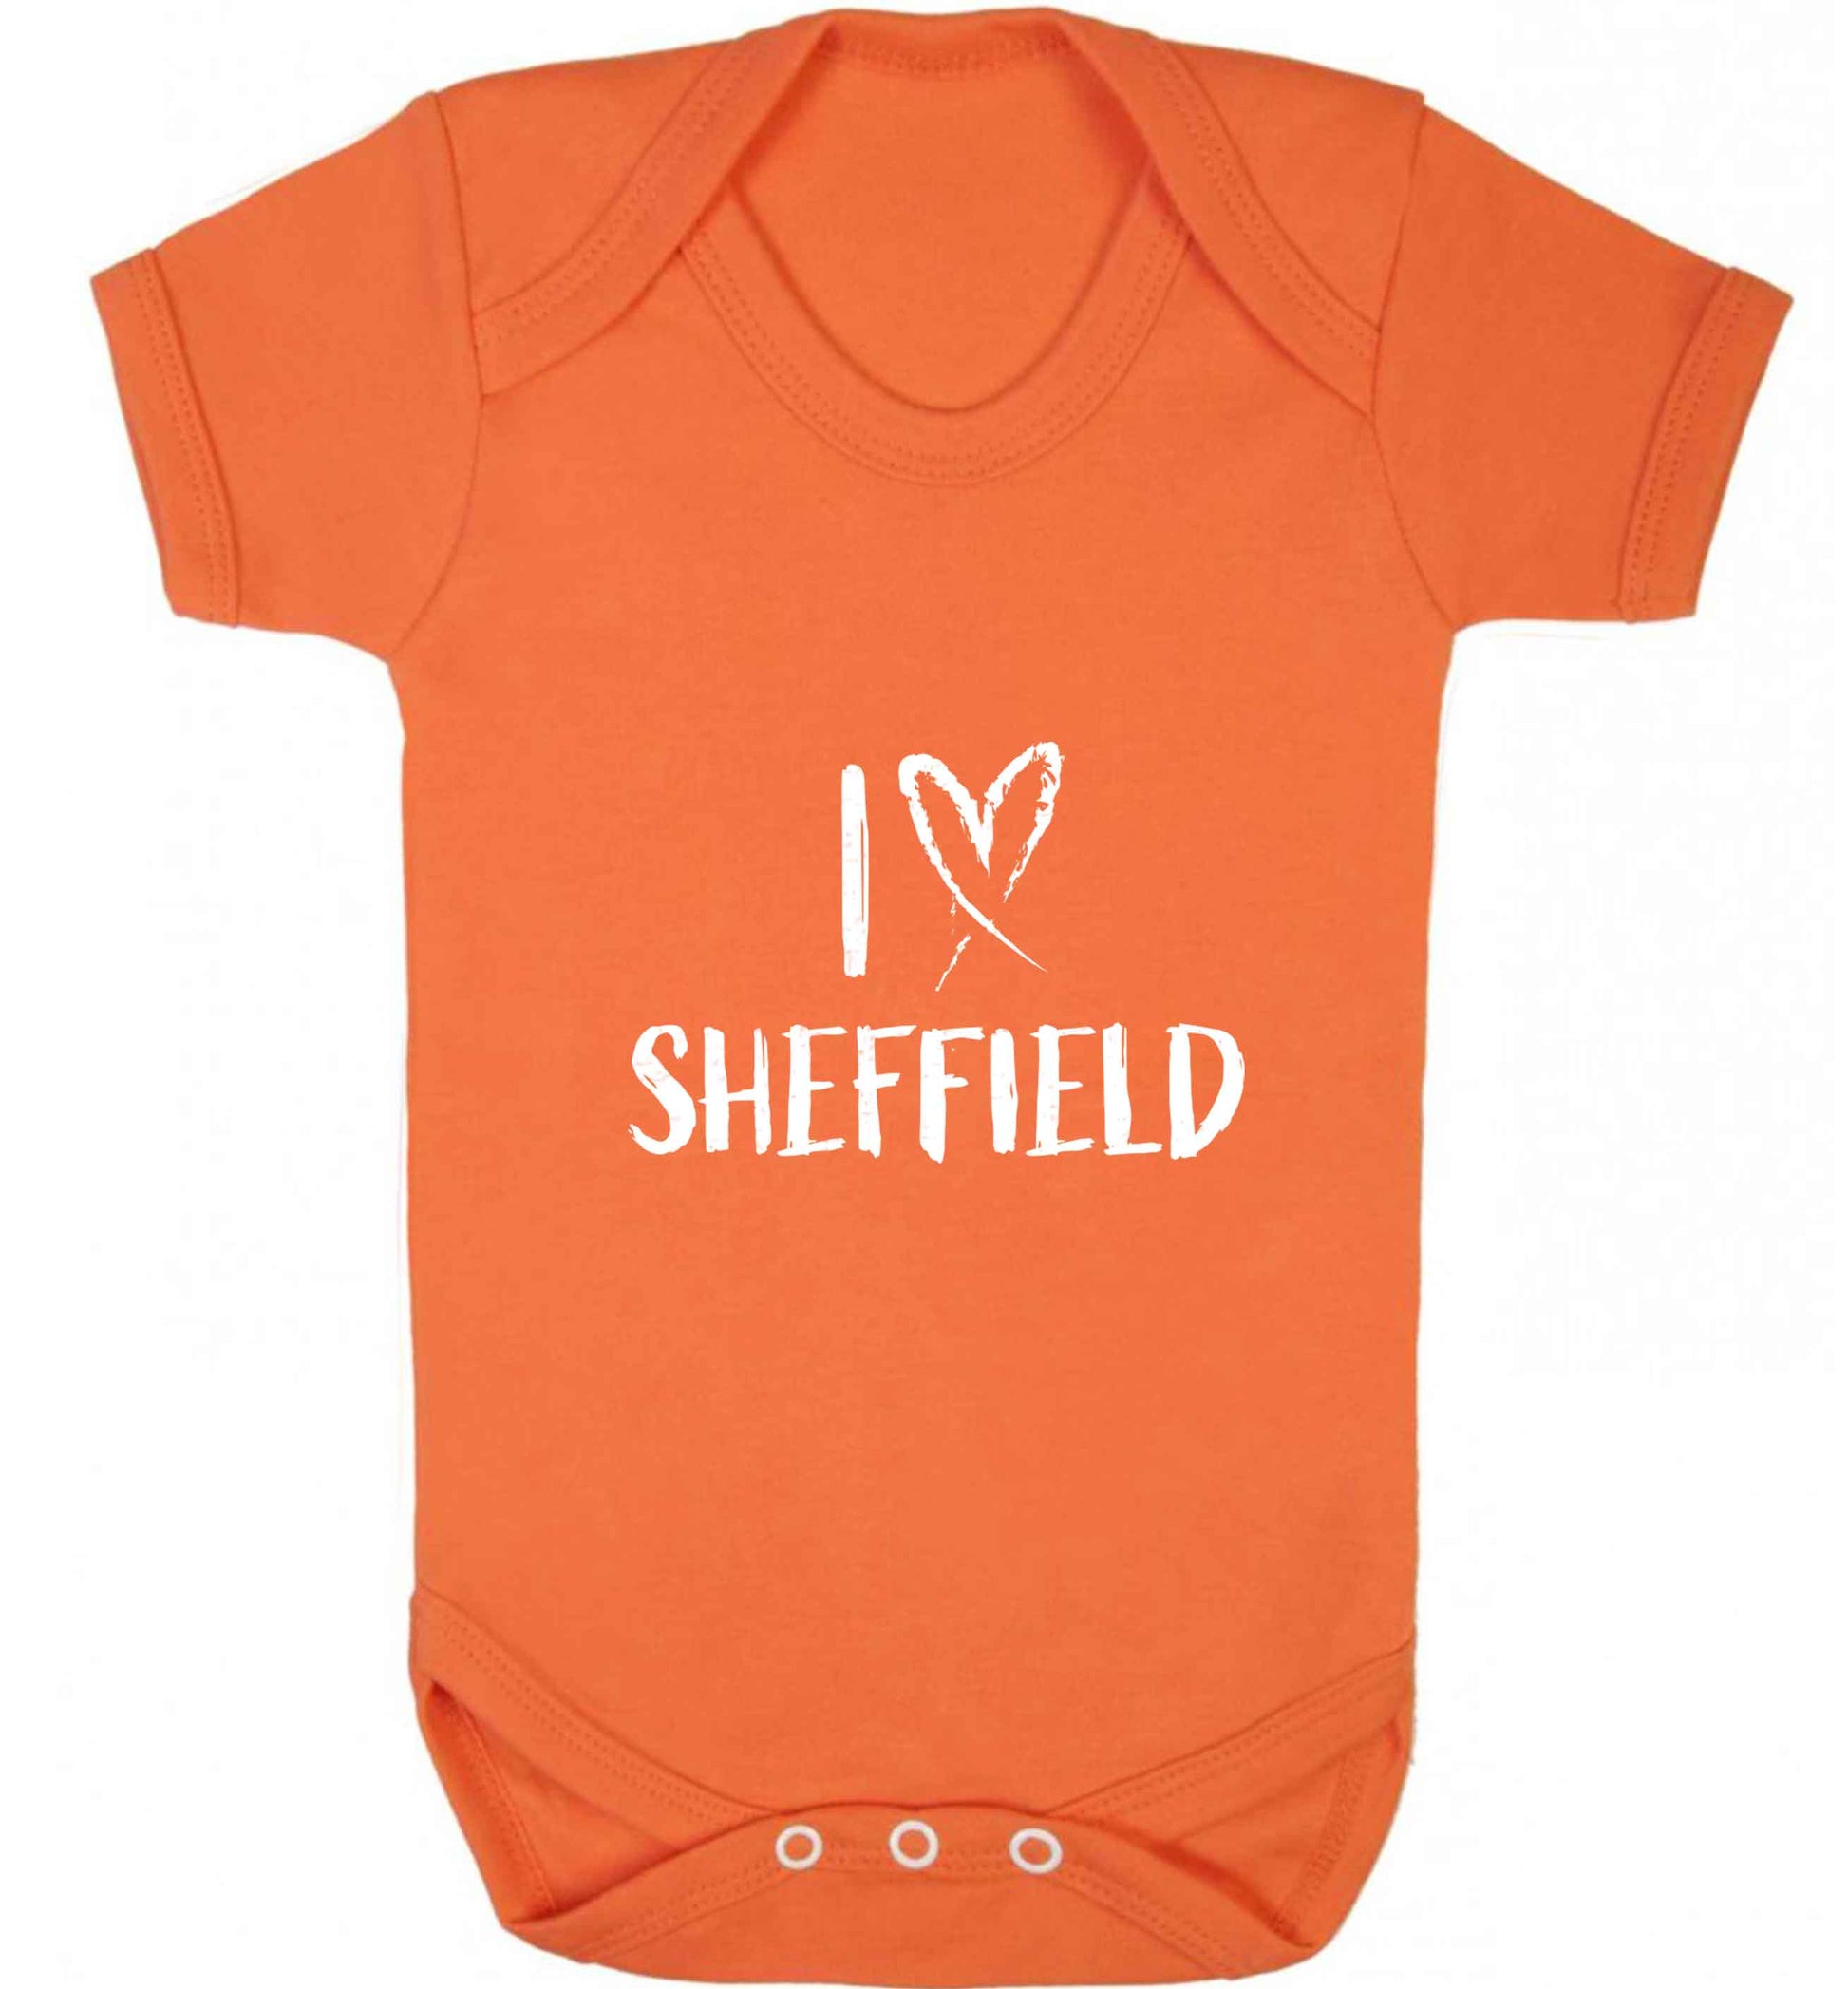 I love Sheffield baby vest orange 18-24 months